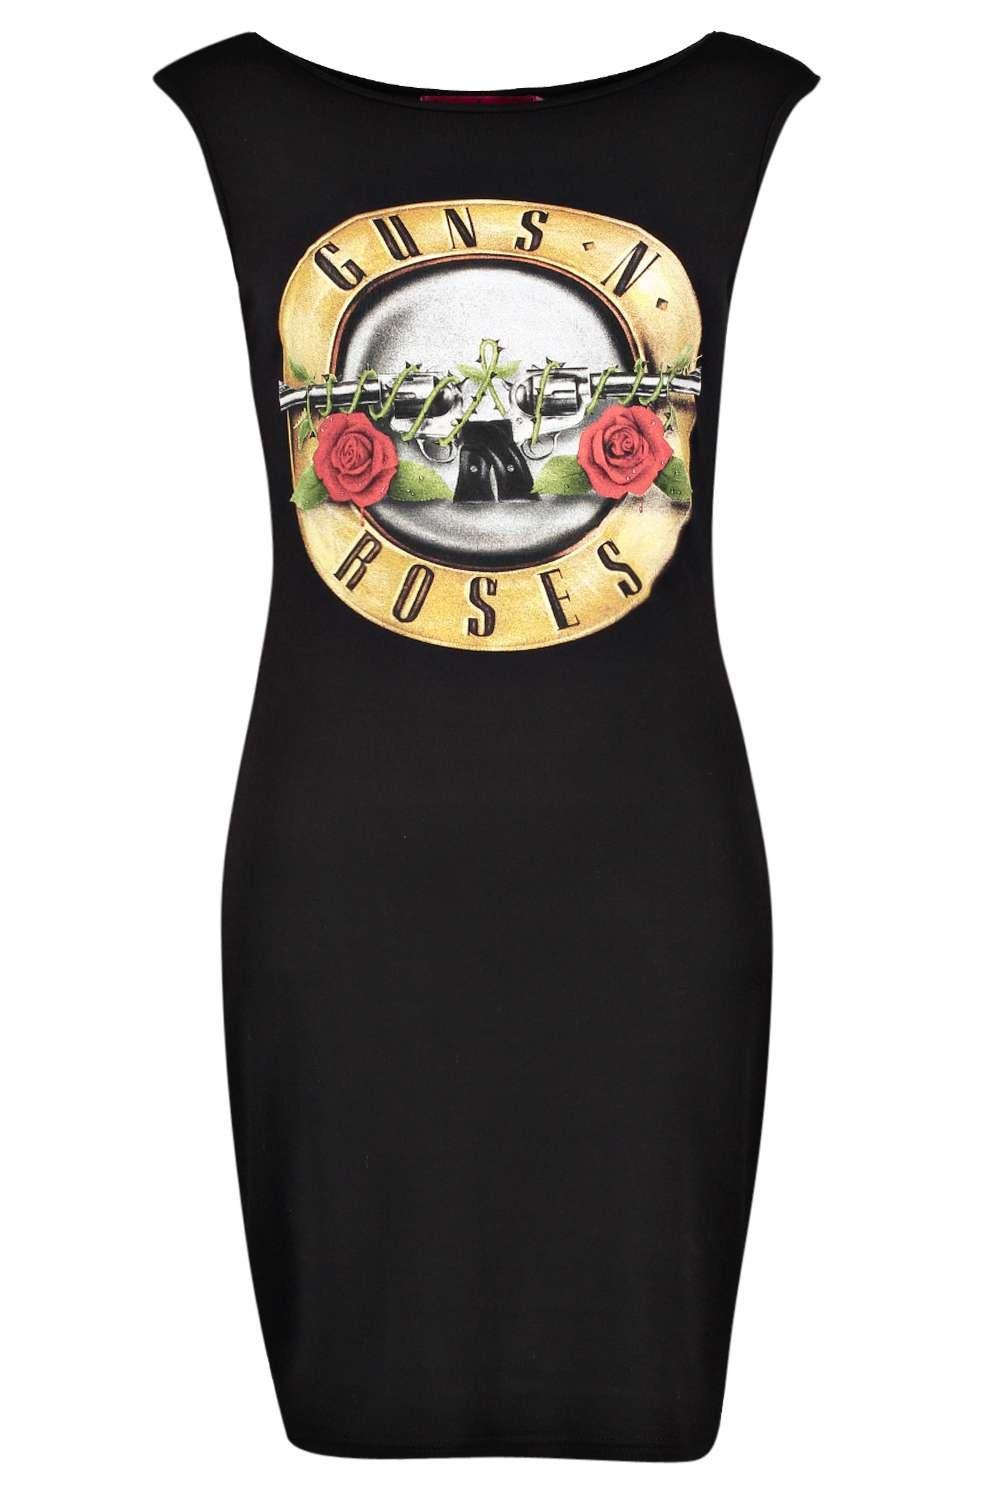 Boohoo Guns N Roses Bodycon Dress in Black | Lyst